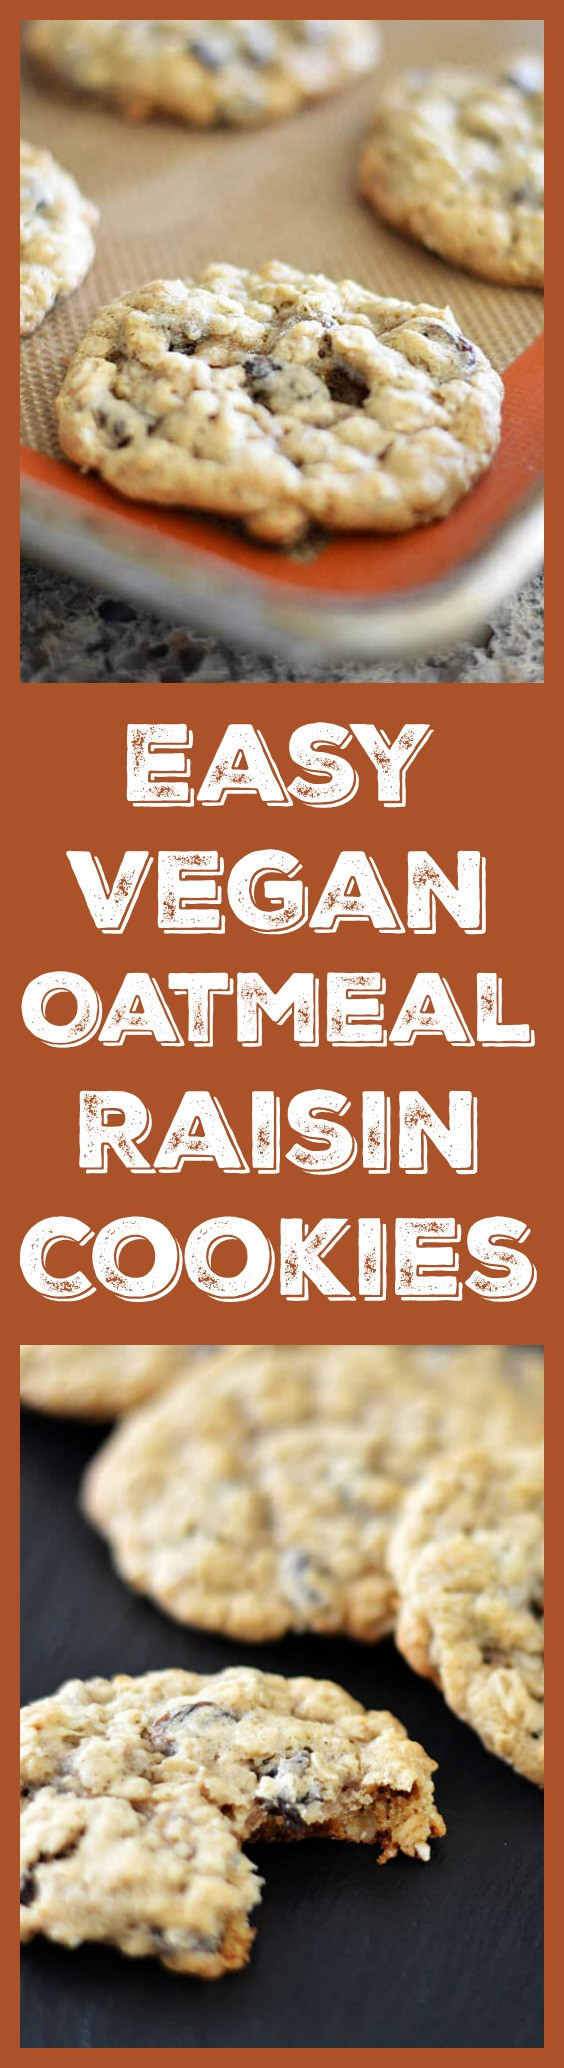 Easy Vegan Oatmeal Cookies
 Easy Vegan Oatmeal Raisin Cookies TheVegLife